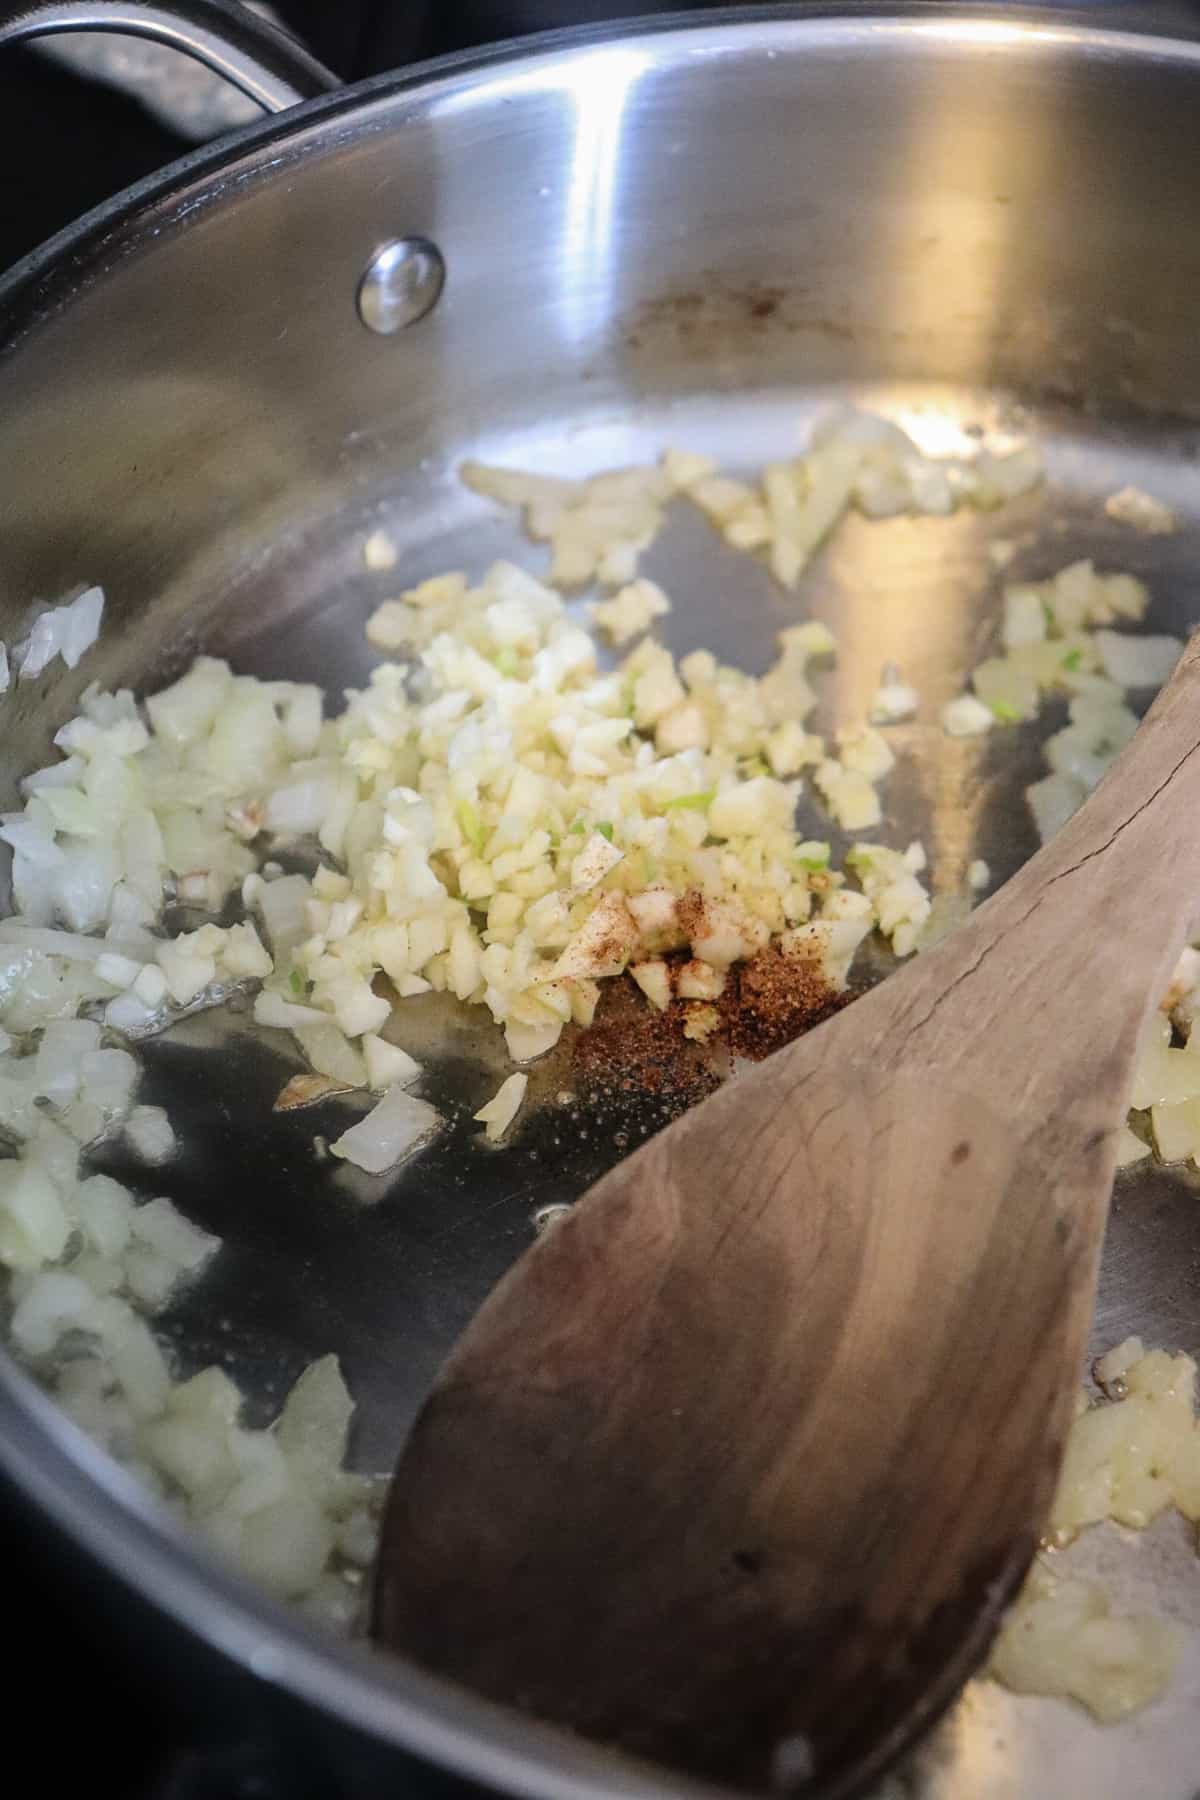 garlic and nutmeg added to sauteed onions.